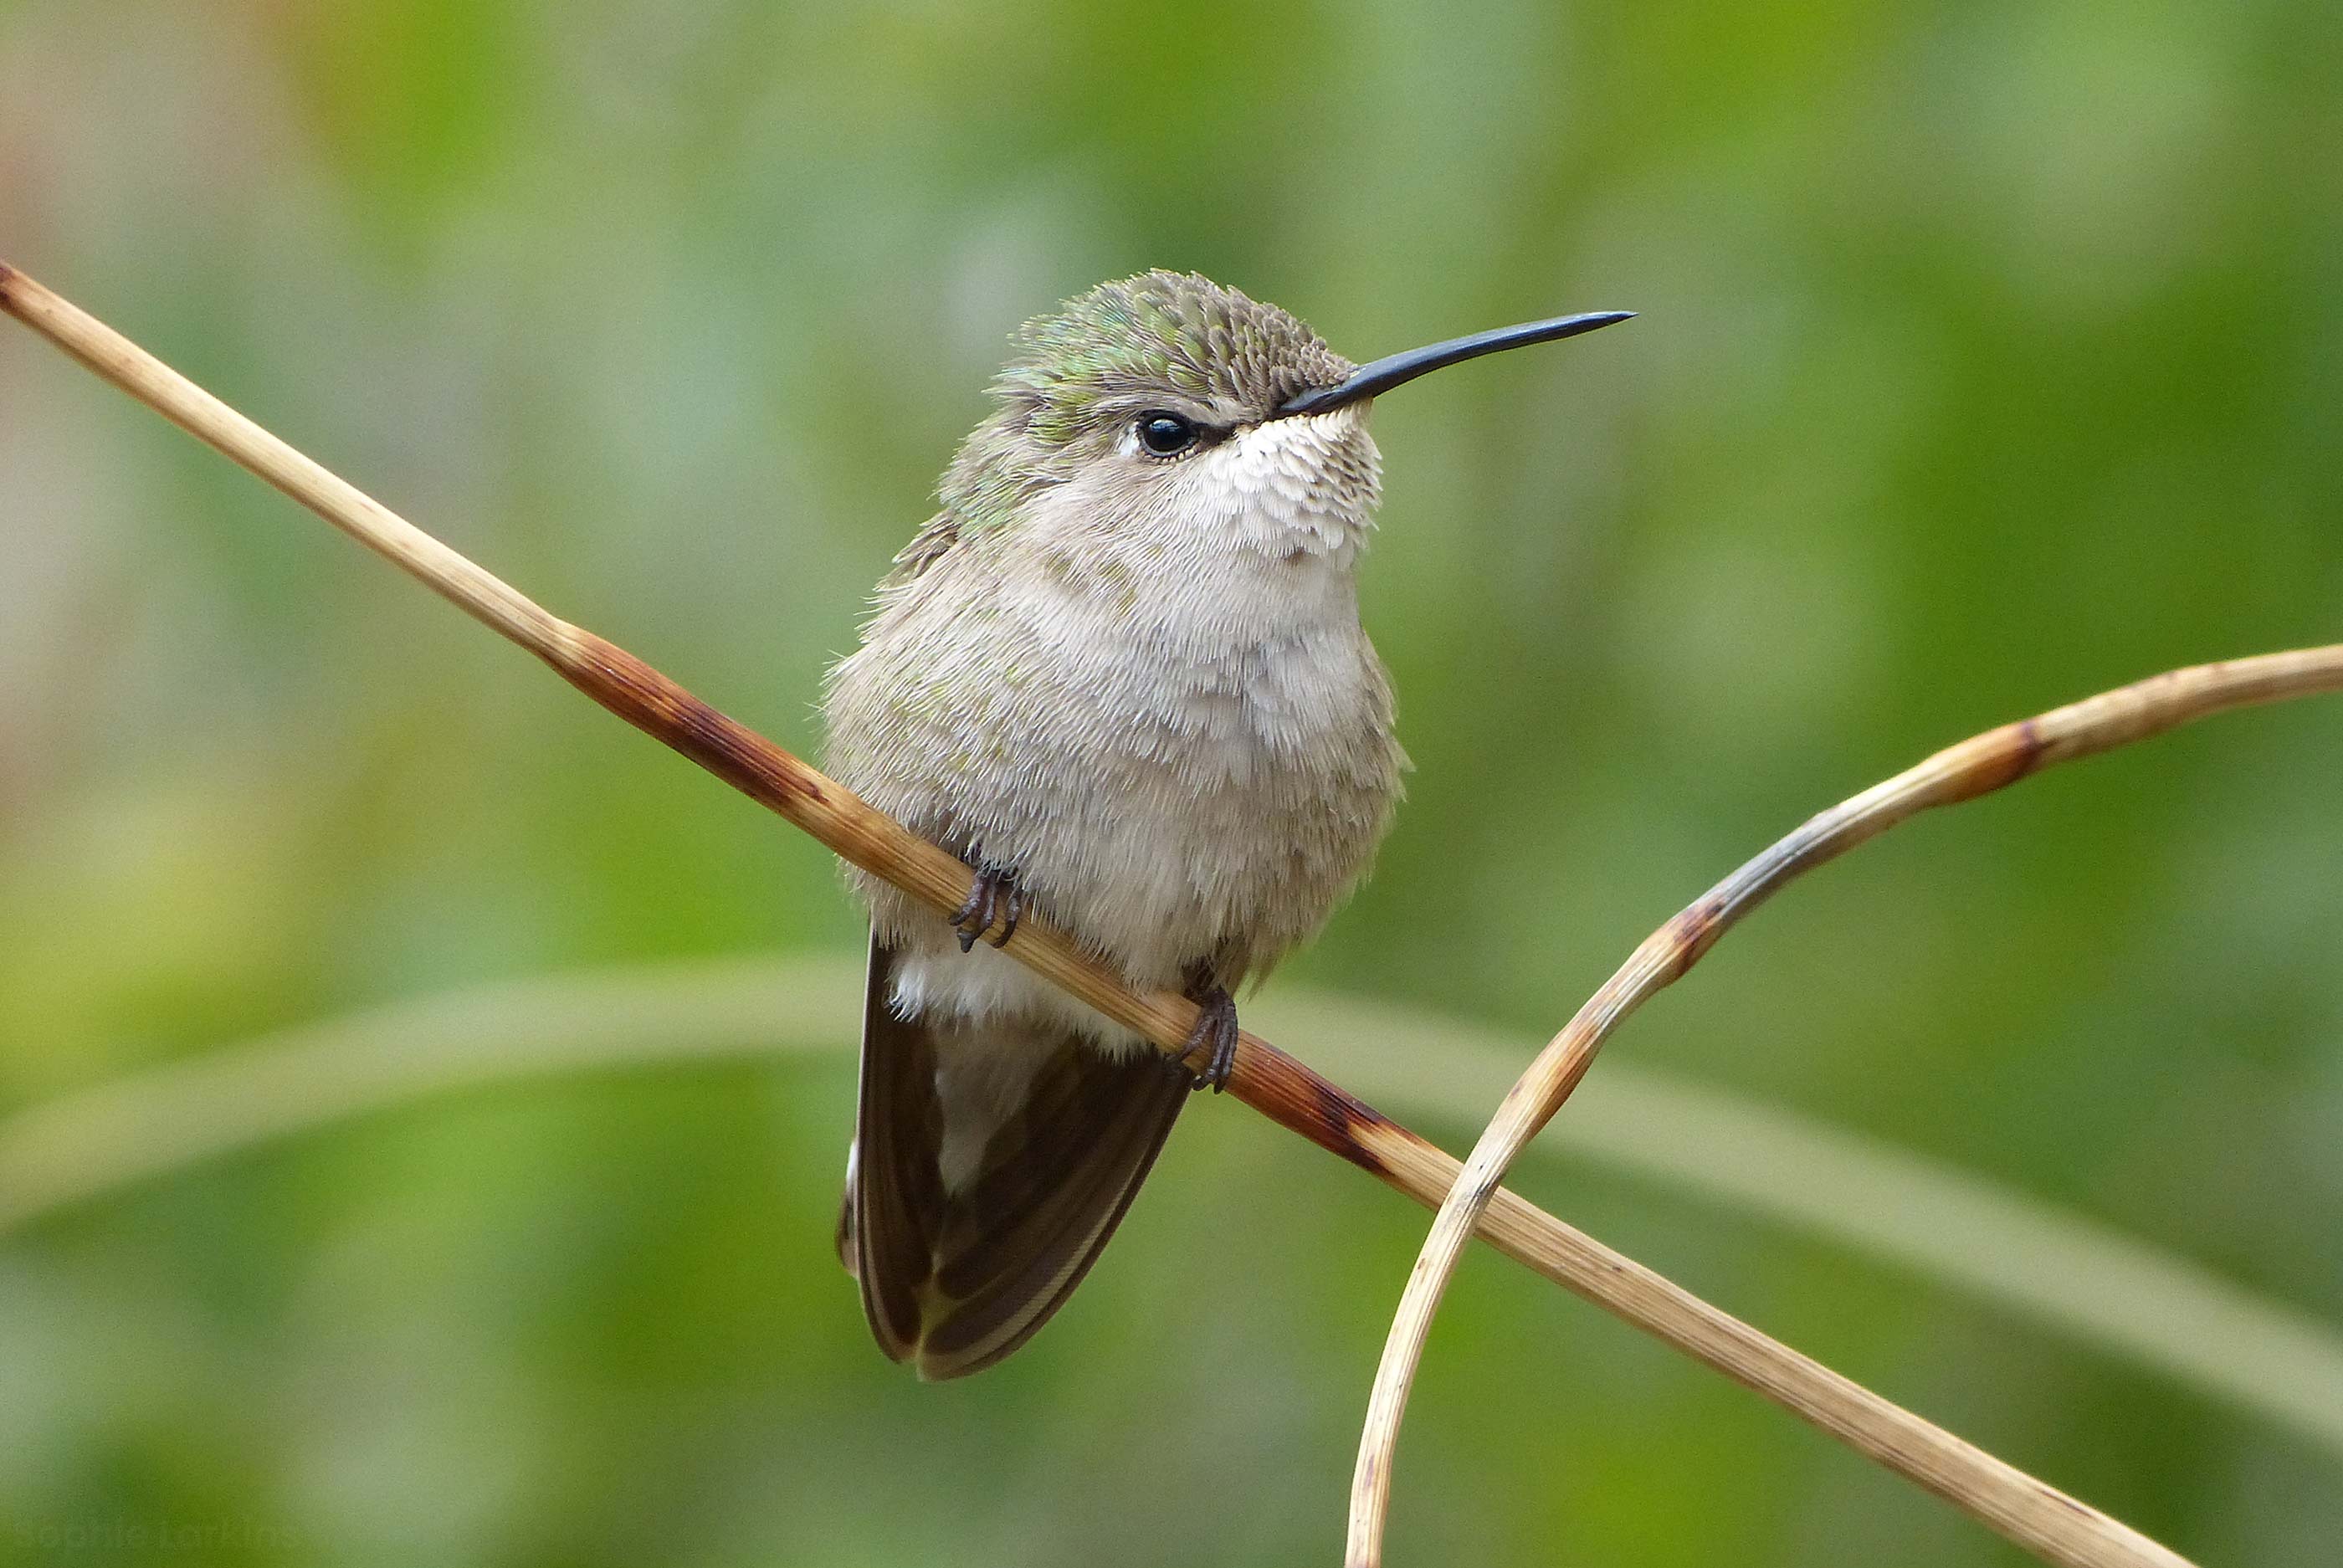 My hummingbird photo that inspired the logo